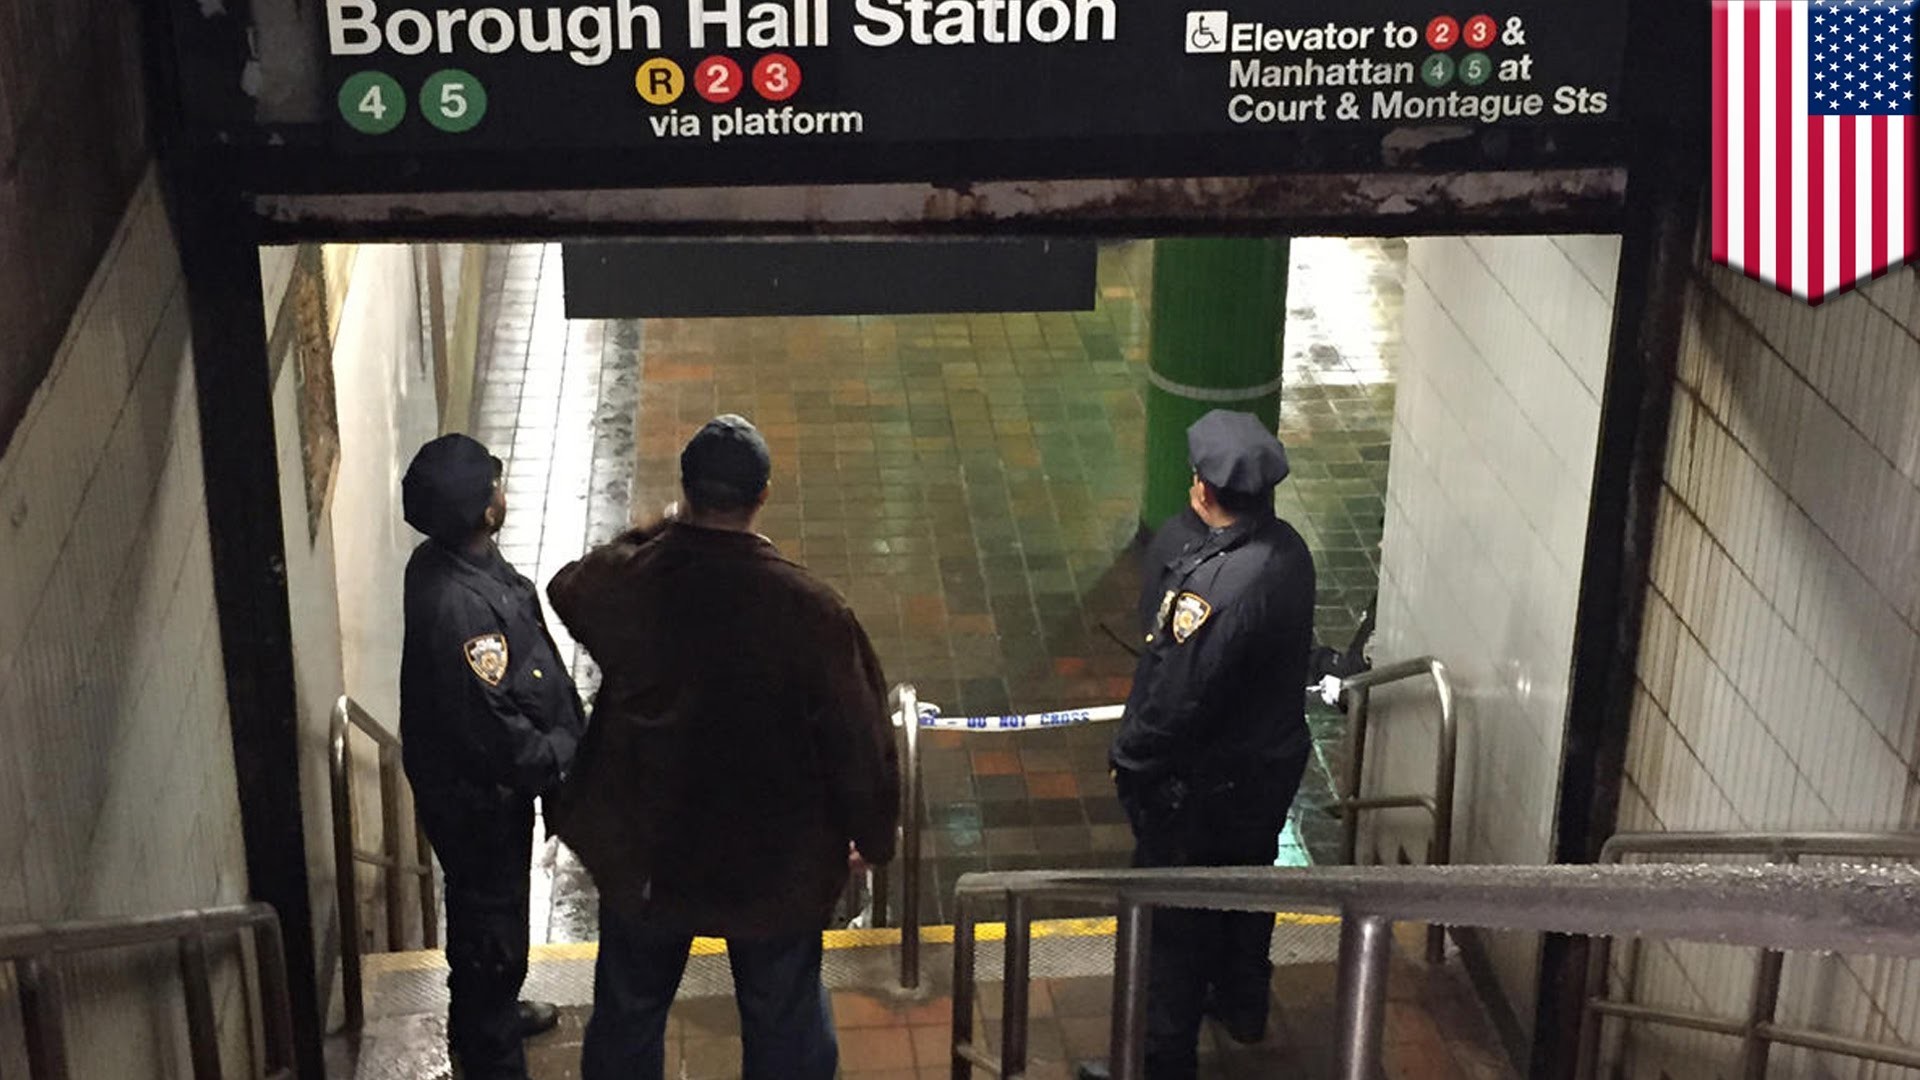 1920x1080 New York subway shooting: retired corrections officer kills man in  Brooklyn's Borough Hall station